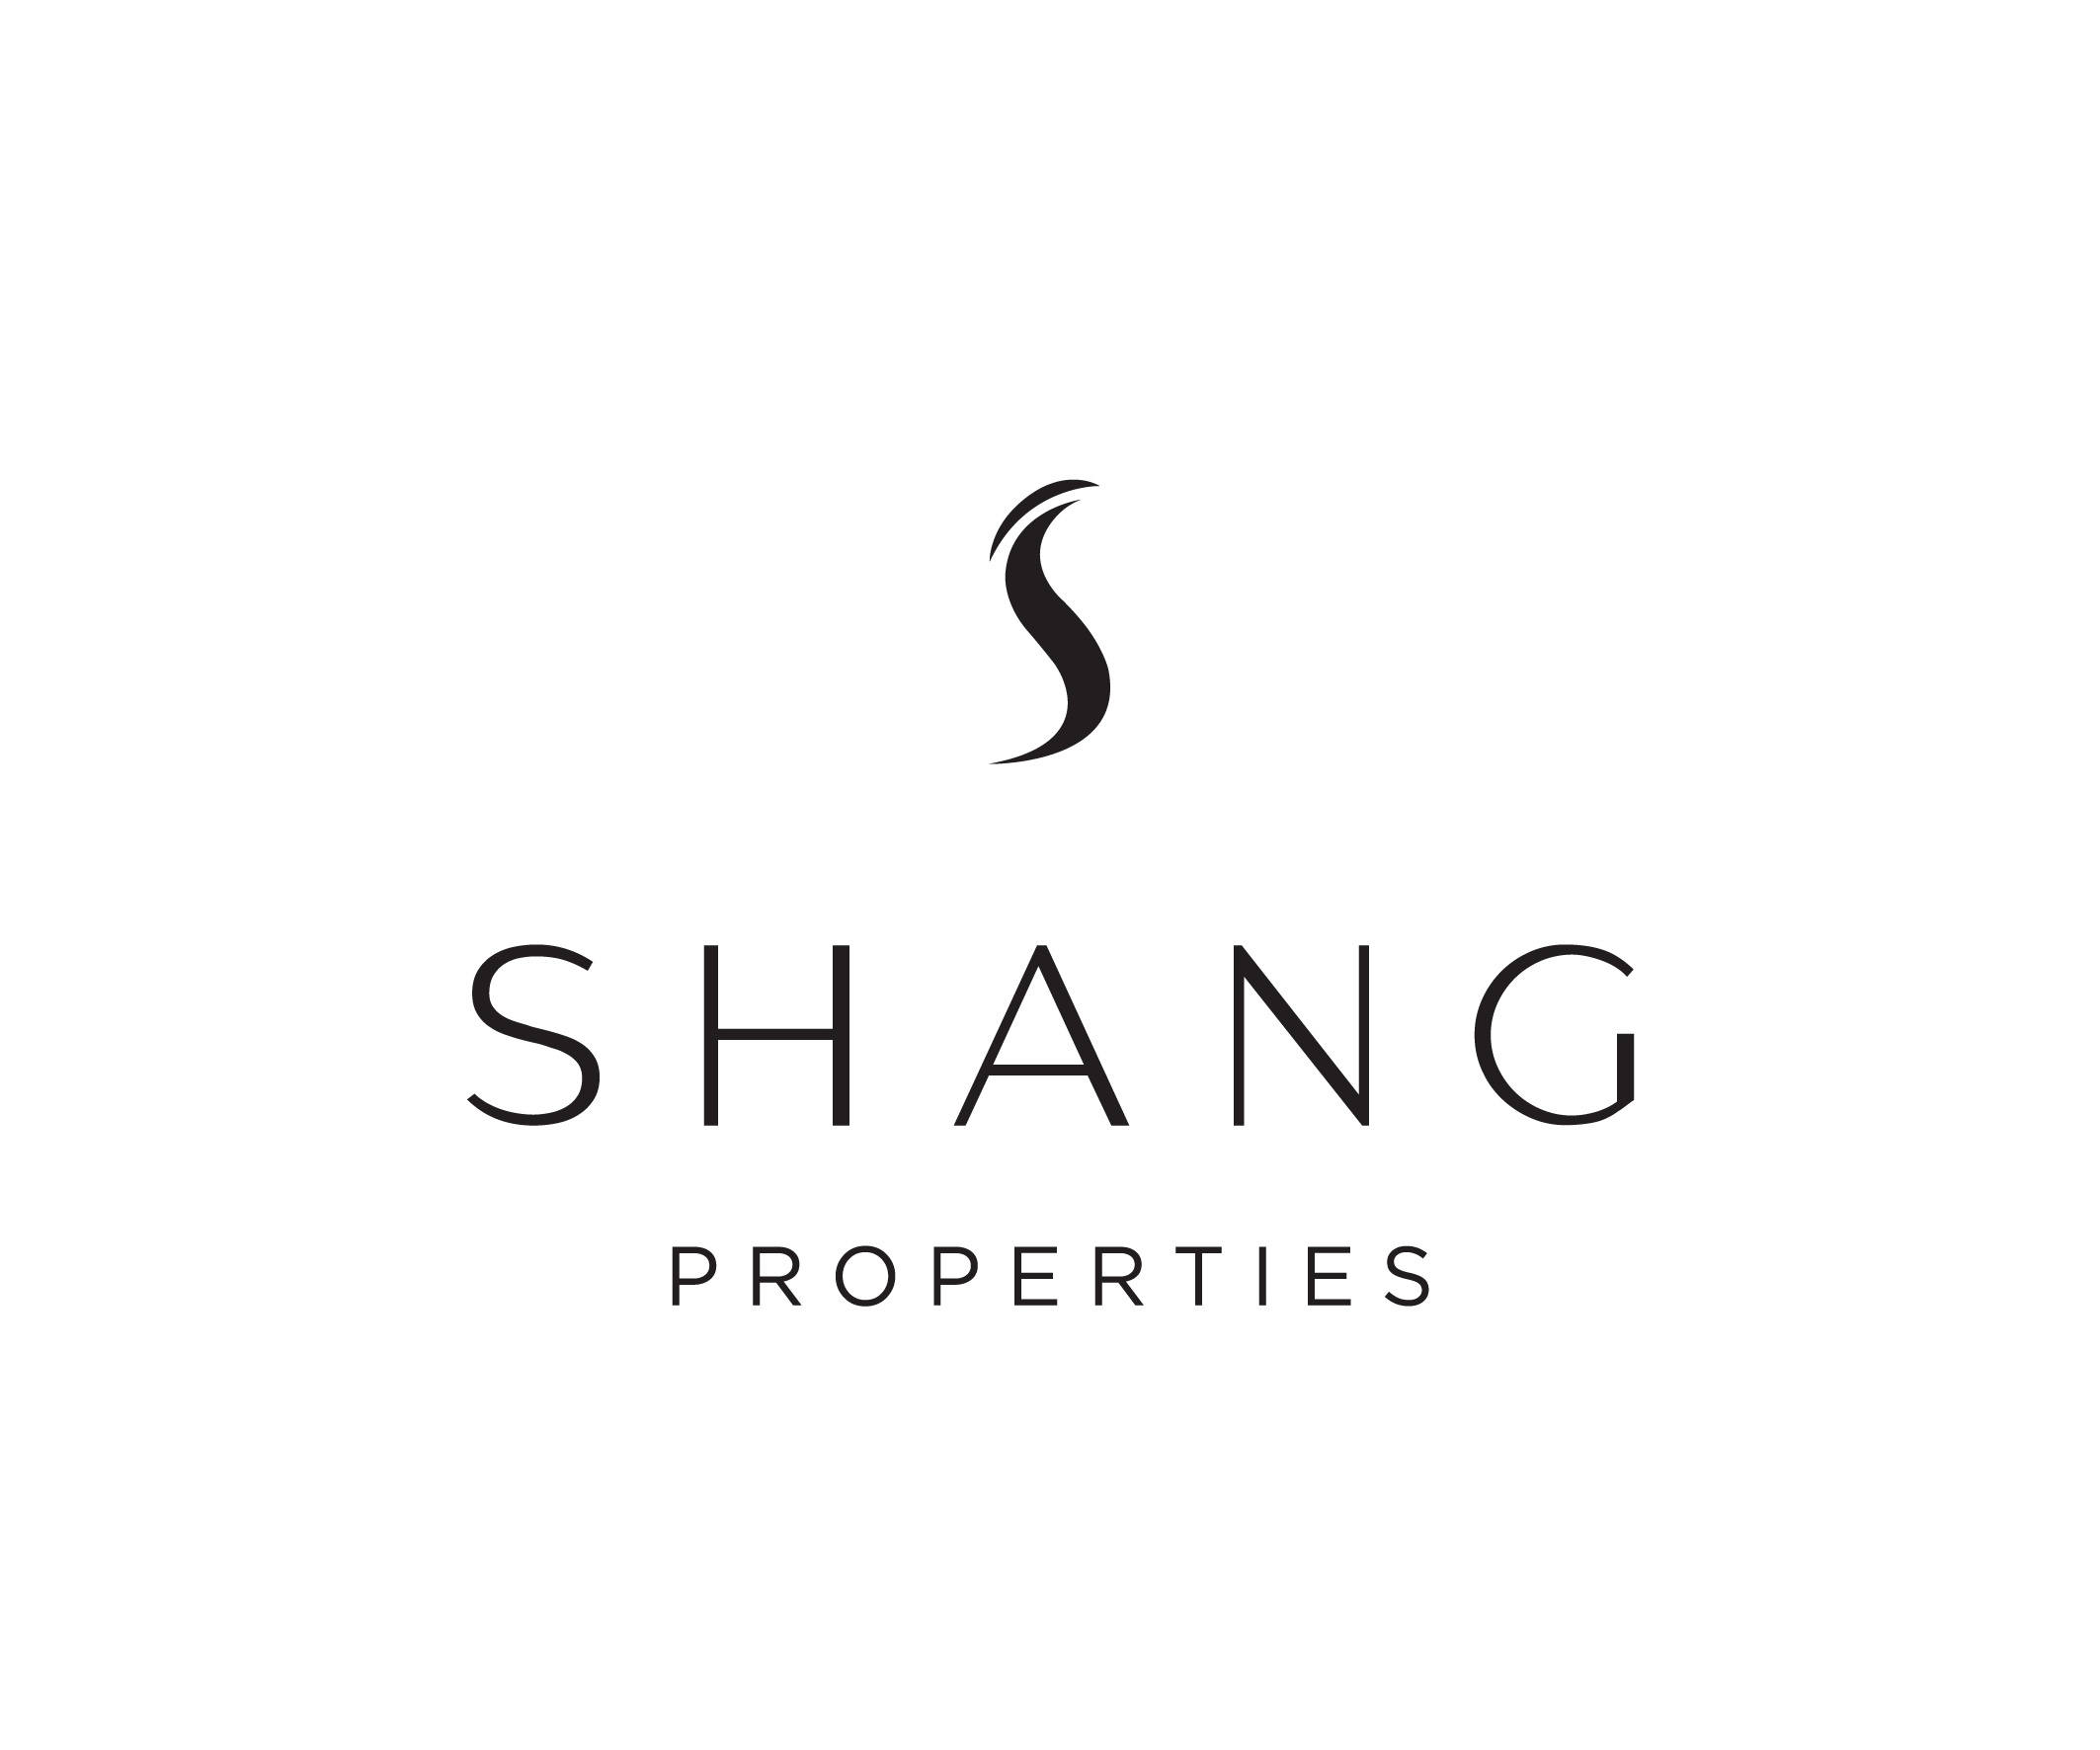 Shang Properties